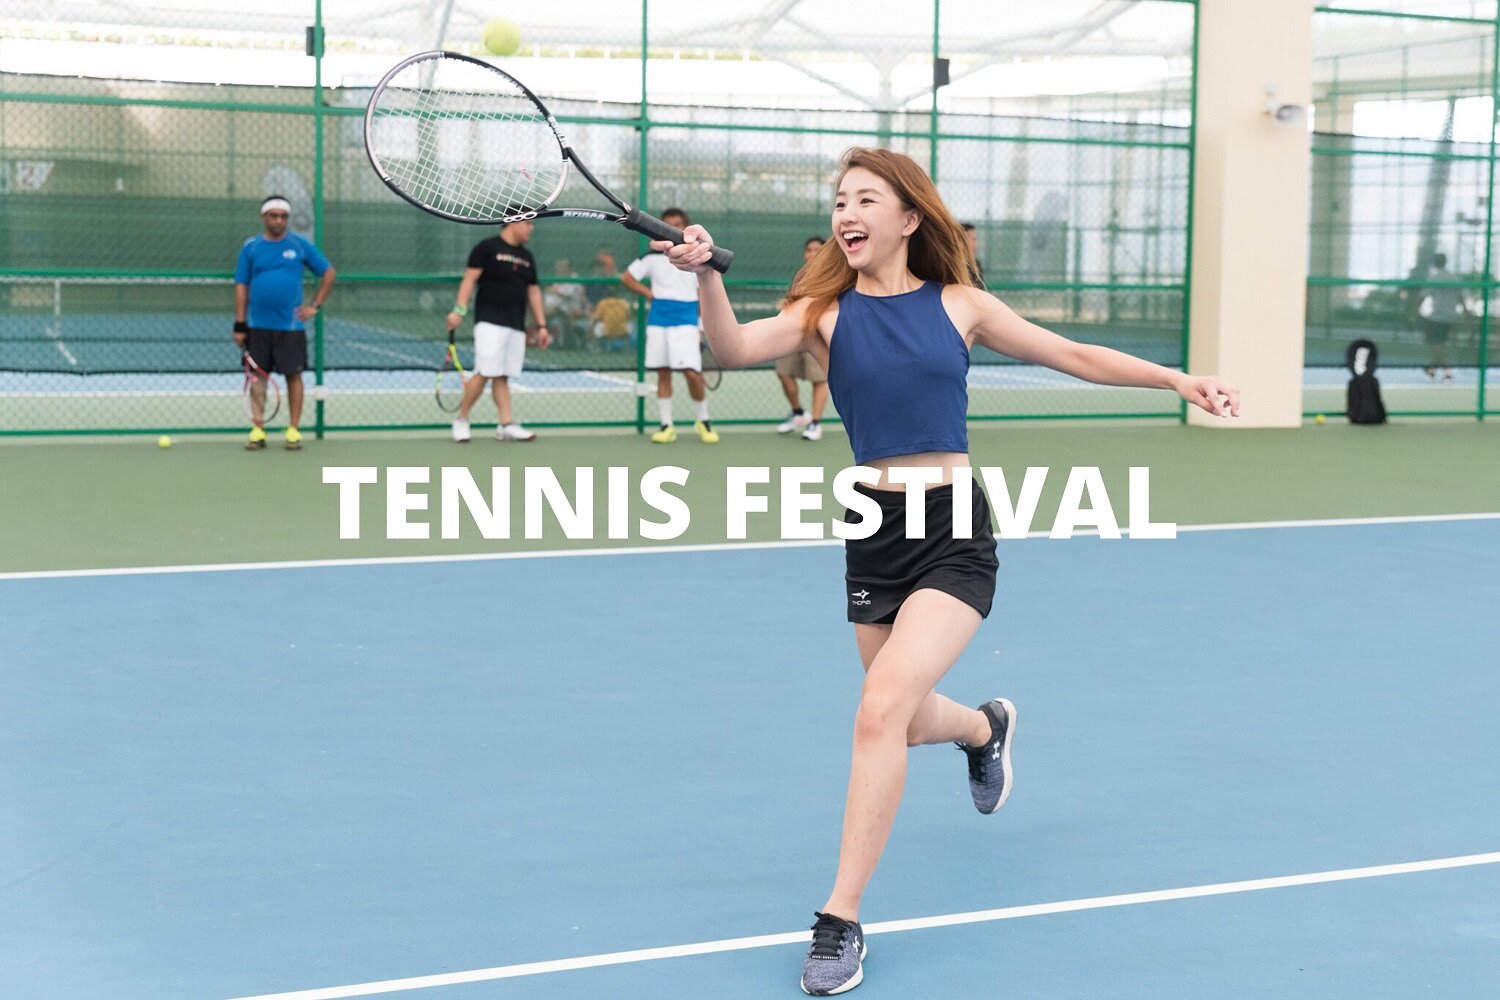 Tennis Festival (Copy)